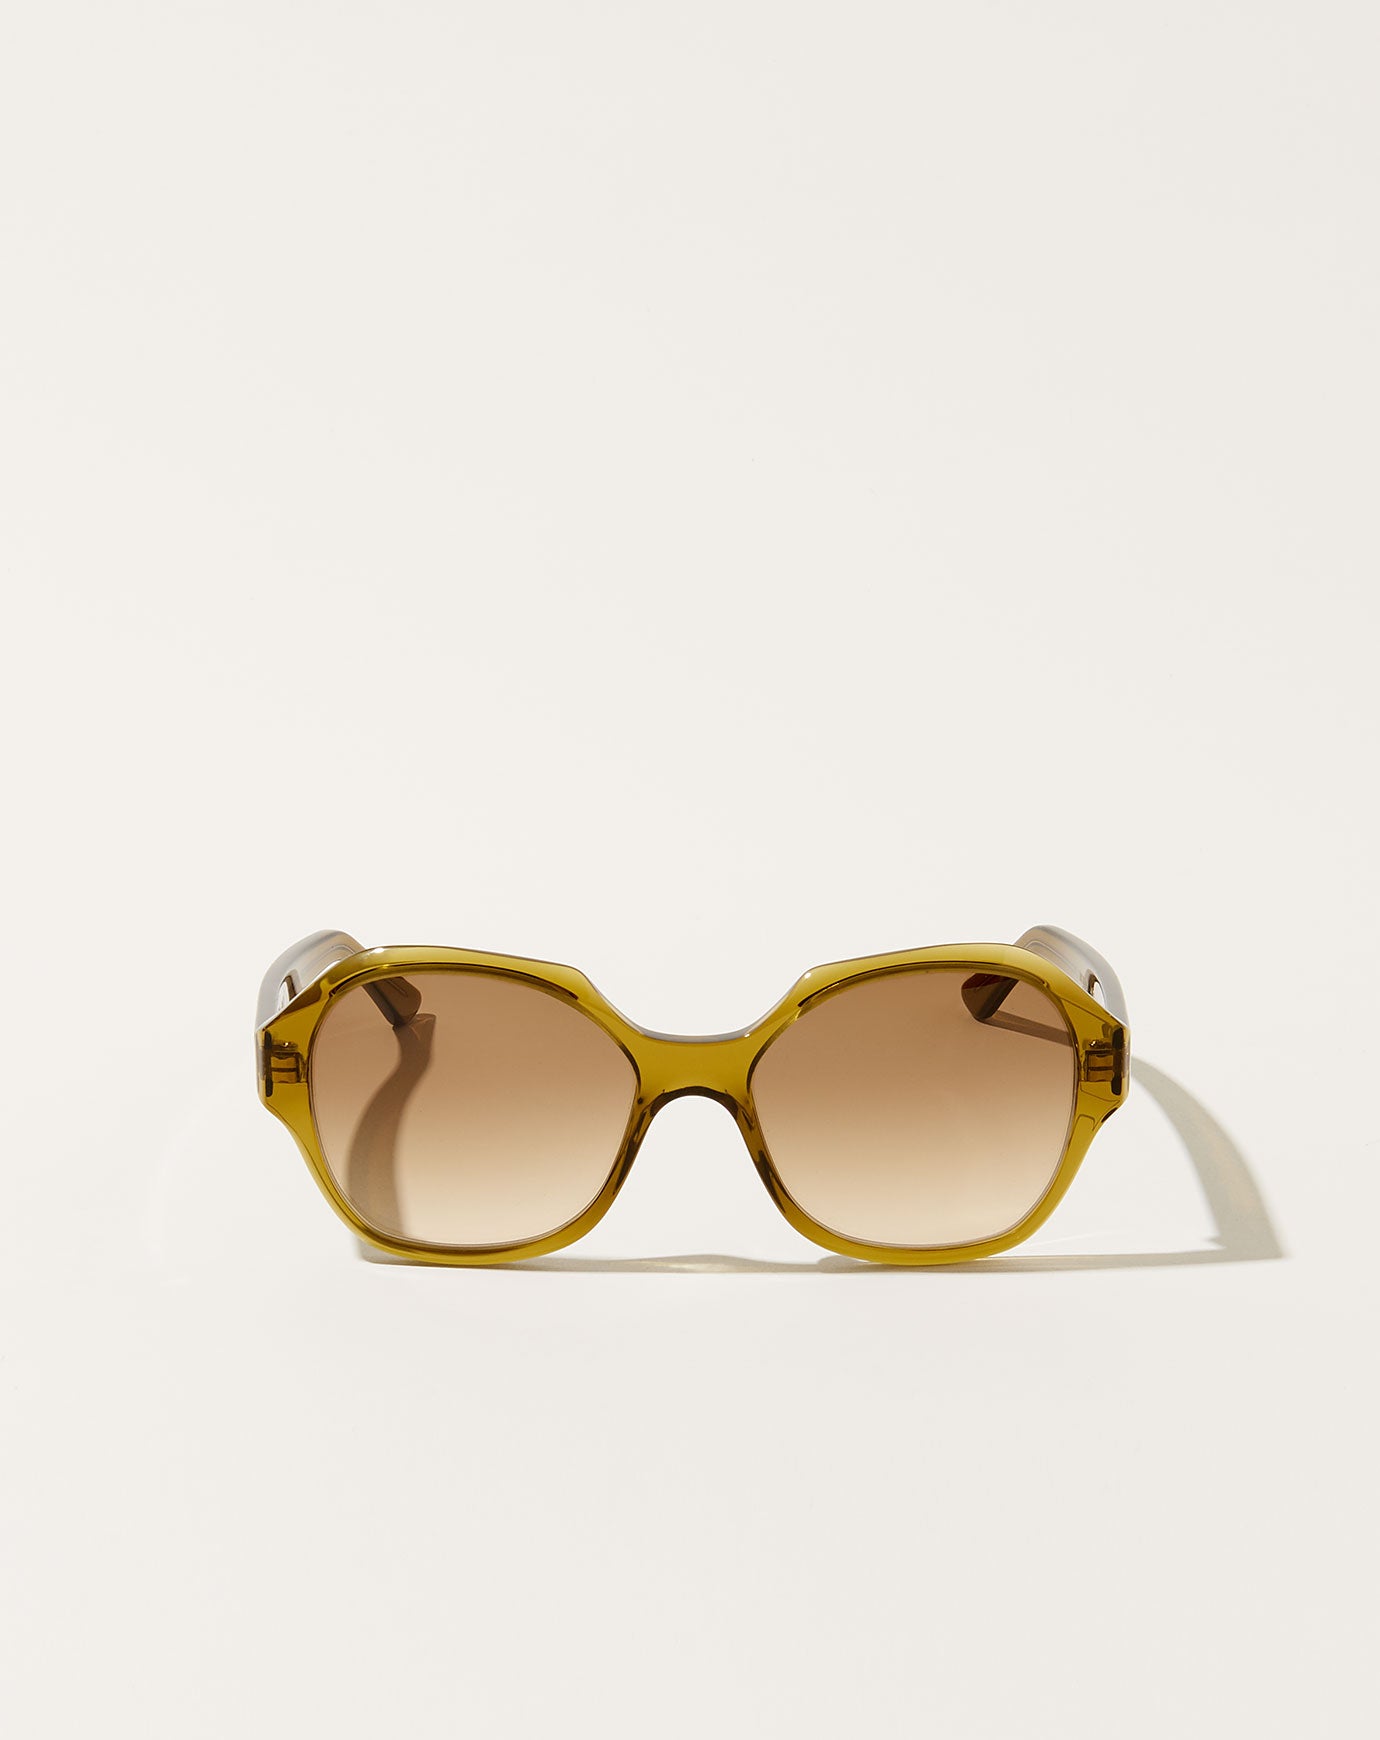 Eva Masaki 001 Sunglasses in Hope